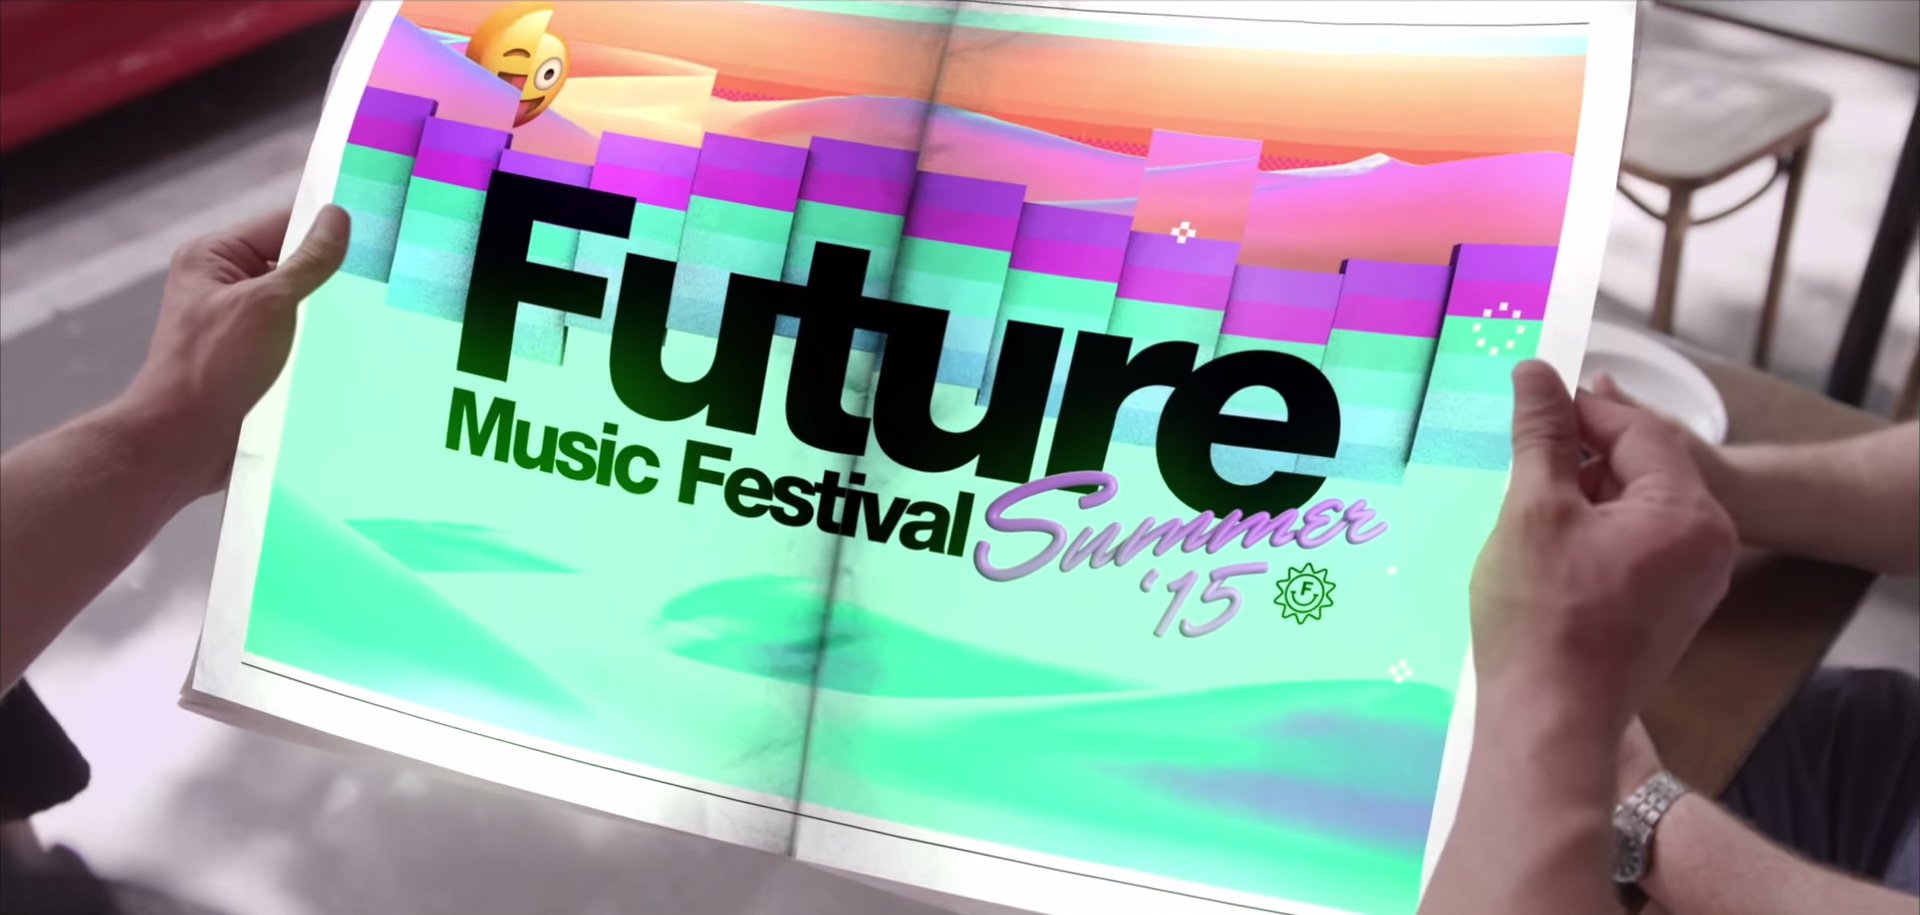 Avicii Will Return To Djing On Australia’s Future Music Fest